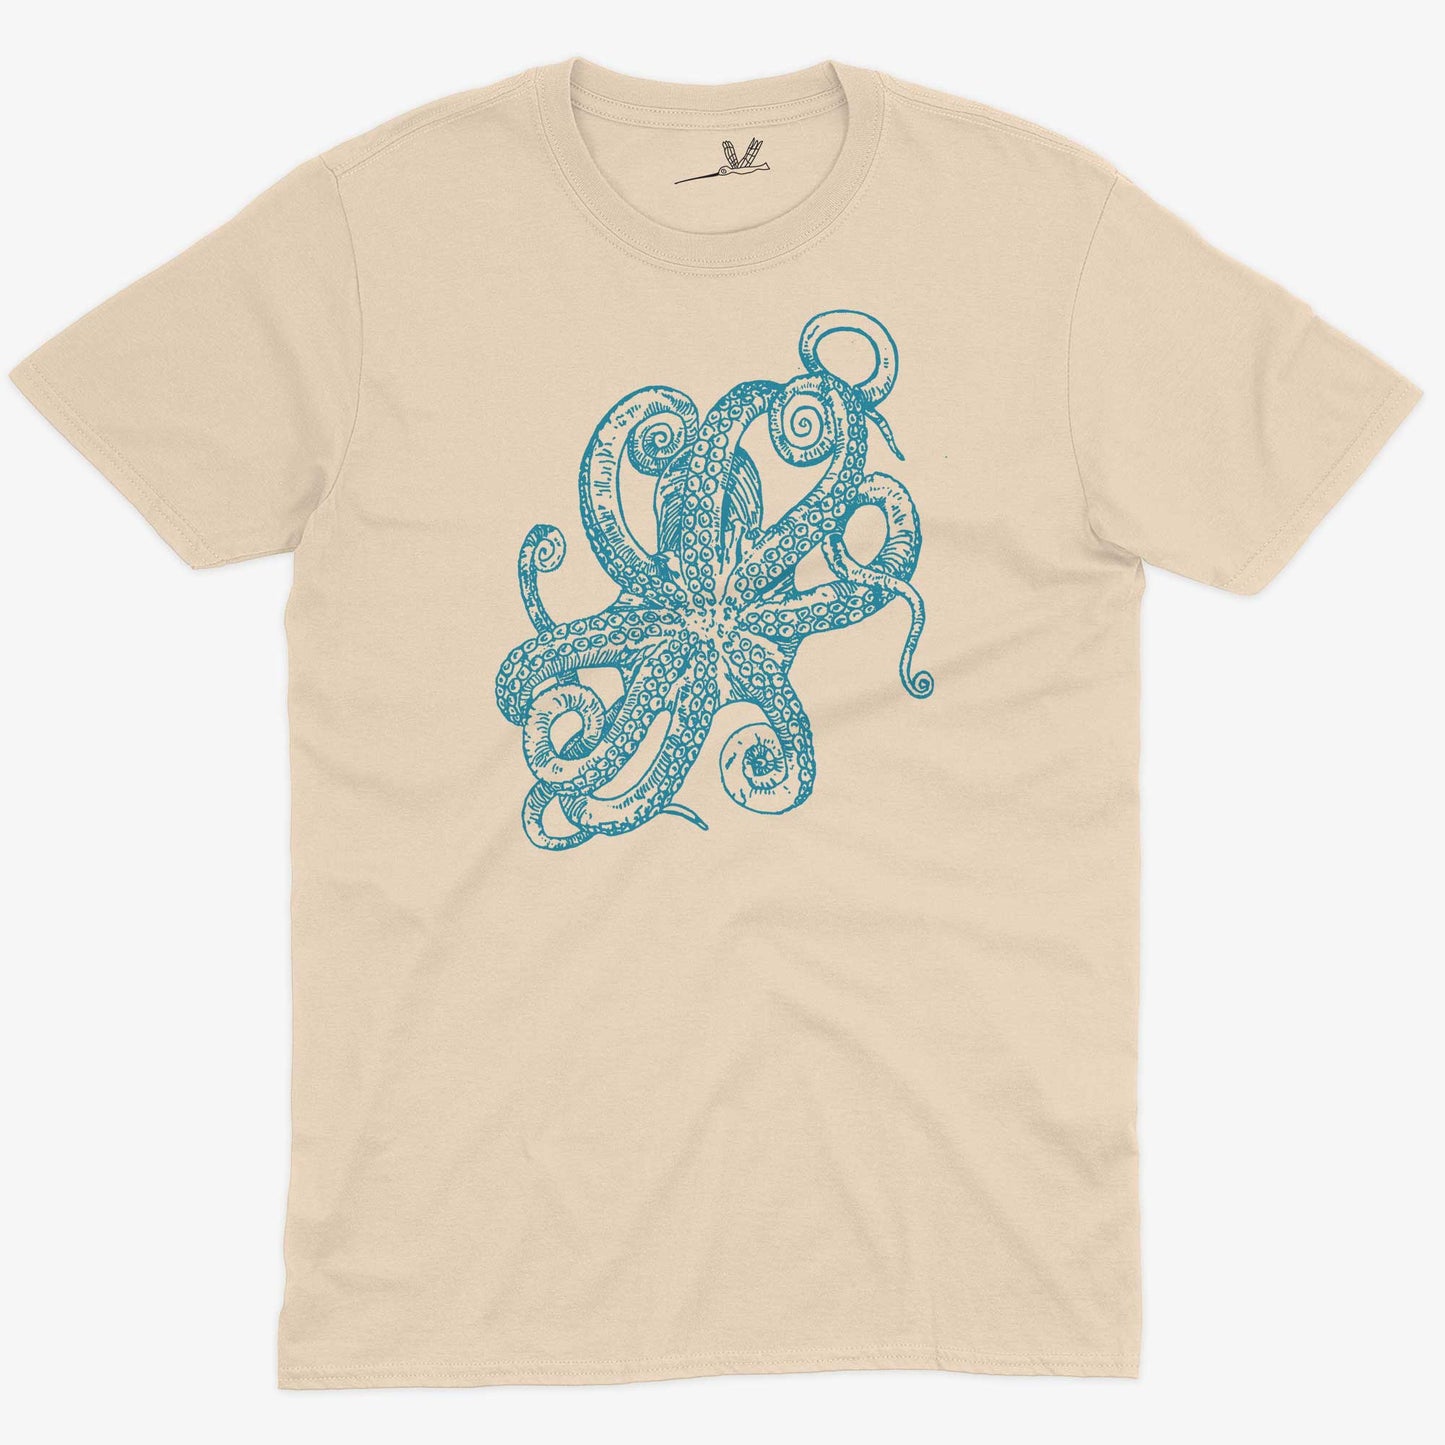 Octopus Underbelly Unisex Or Women's Cotton T-shirt-Organic Natural-Unisex